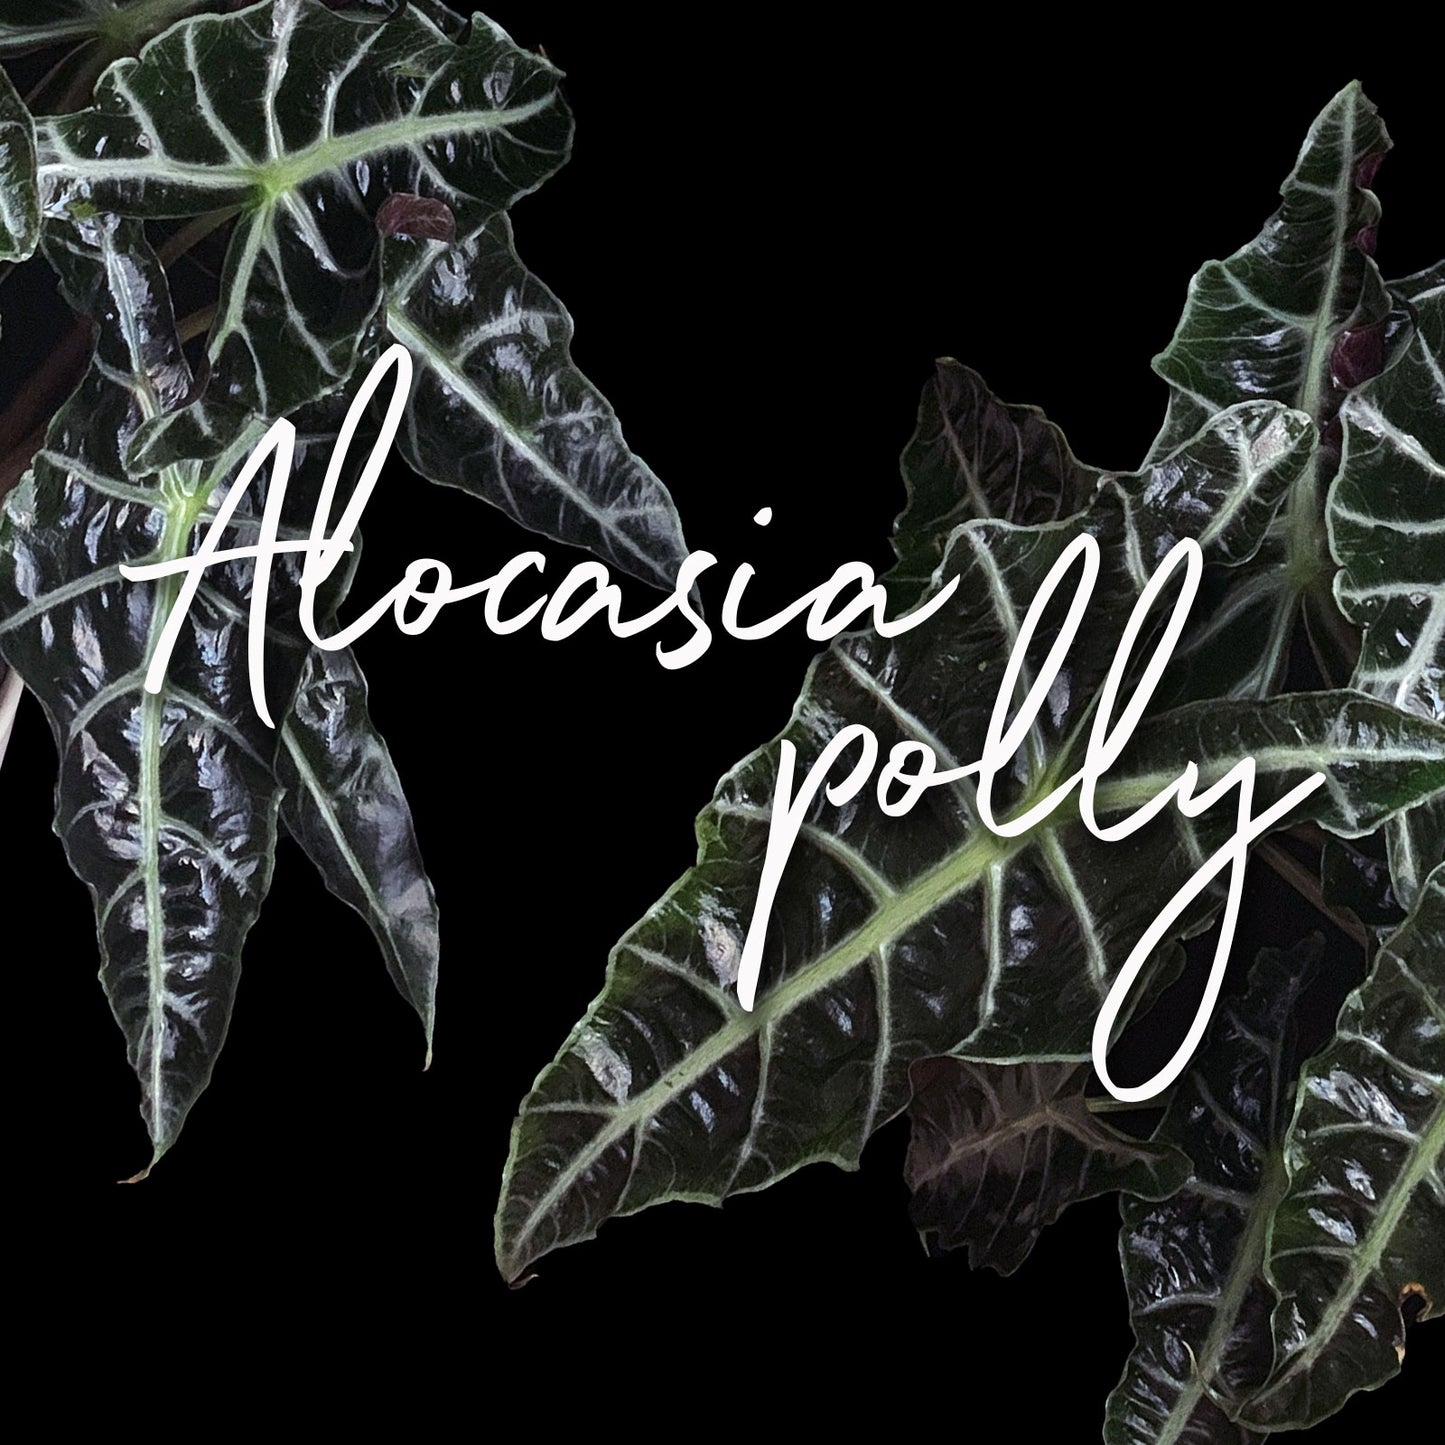 Plant Life: Alocasia polly